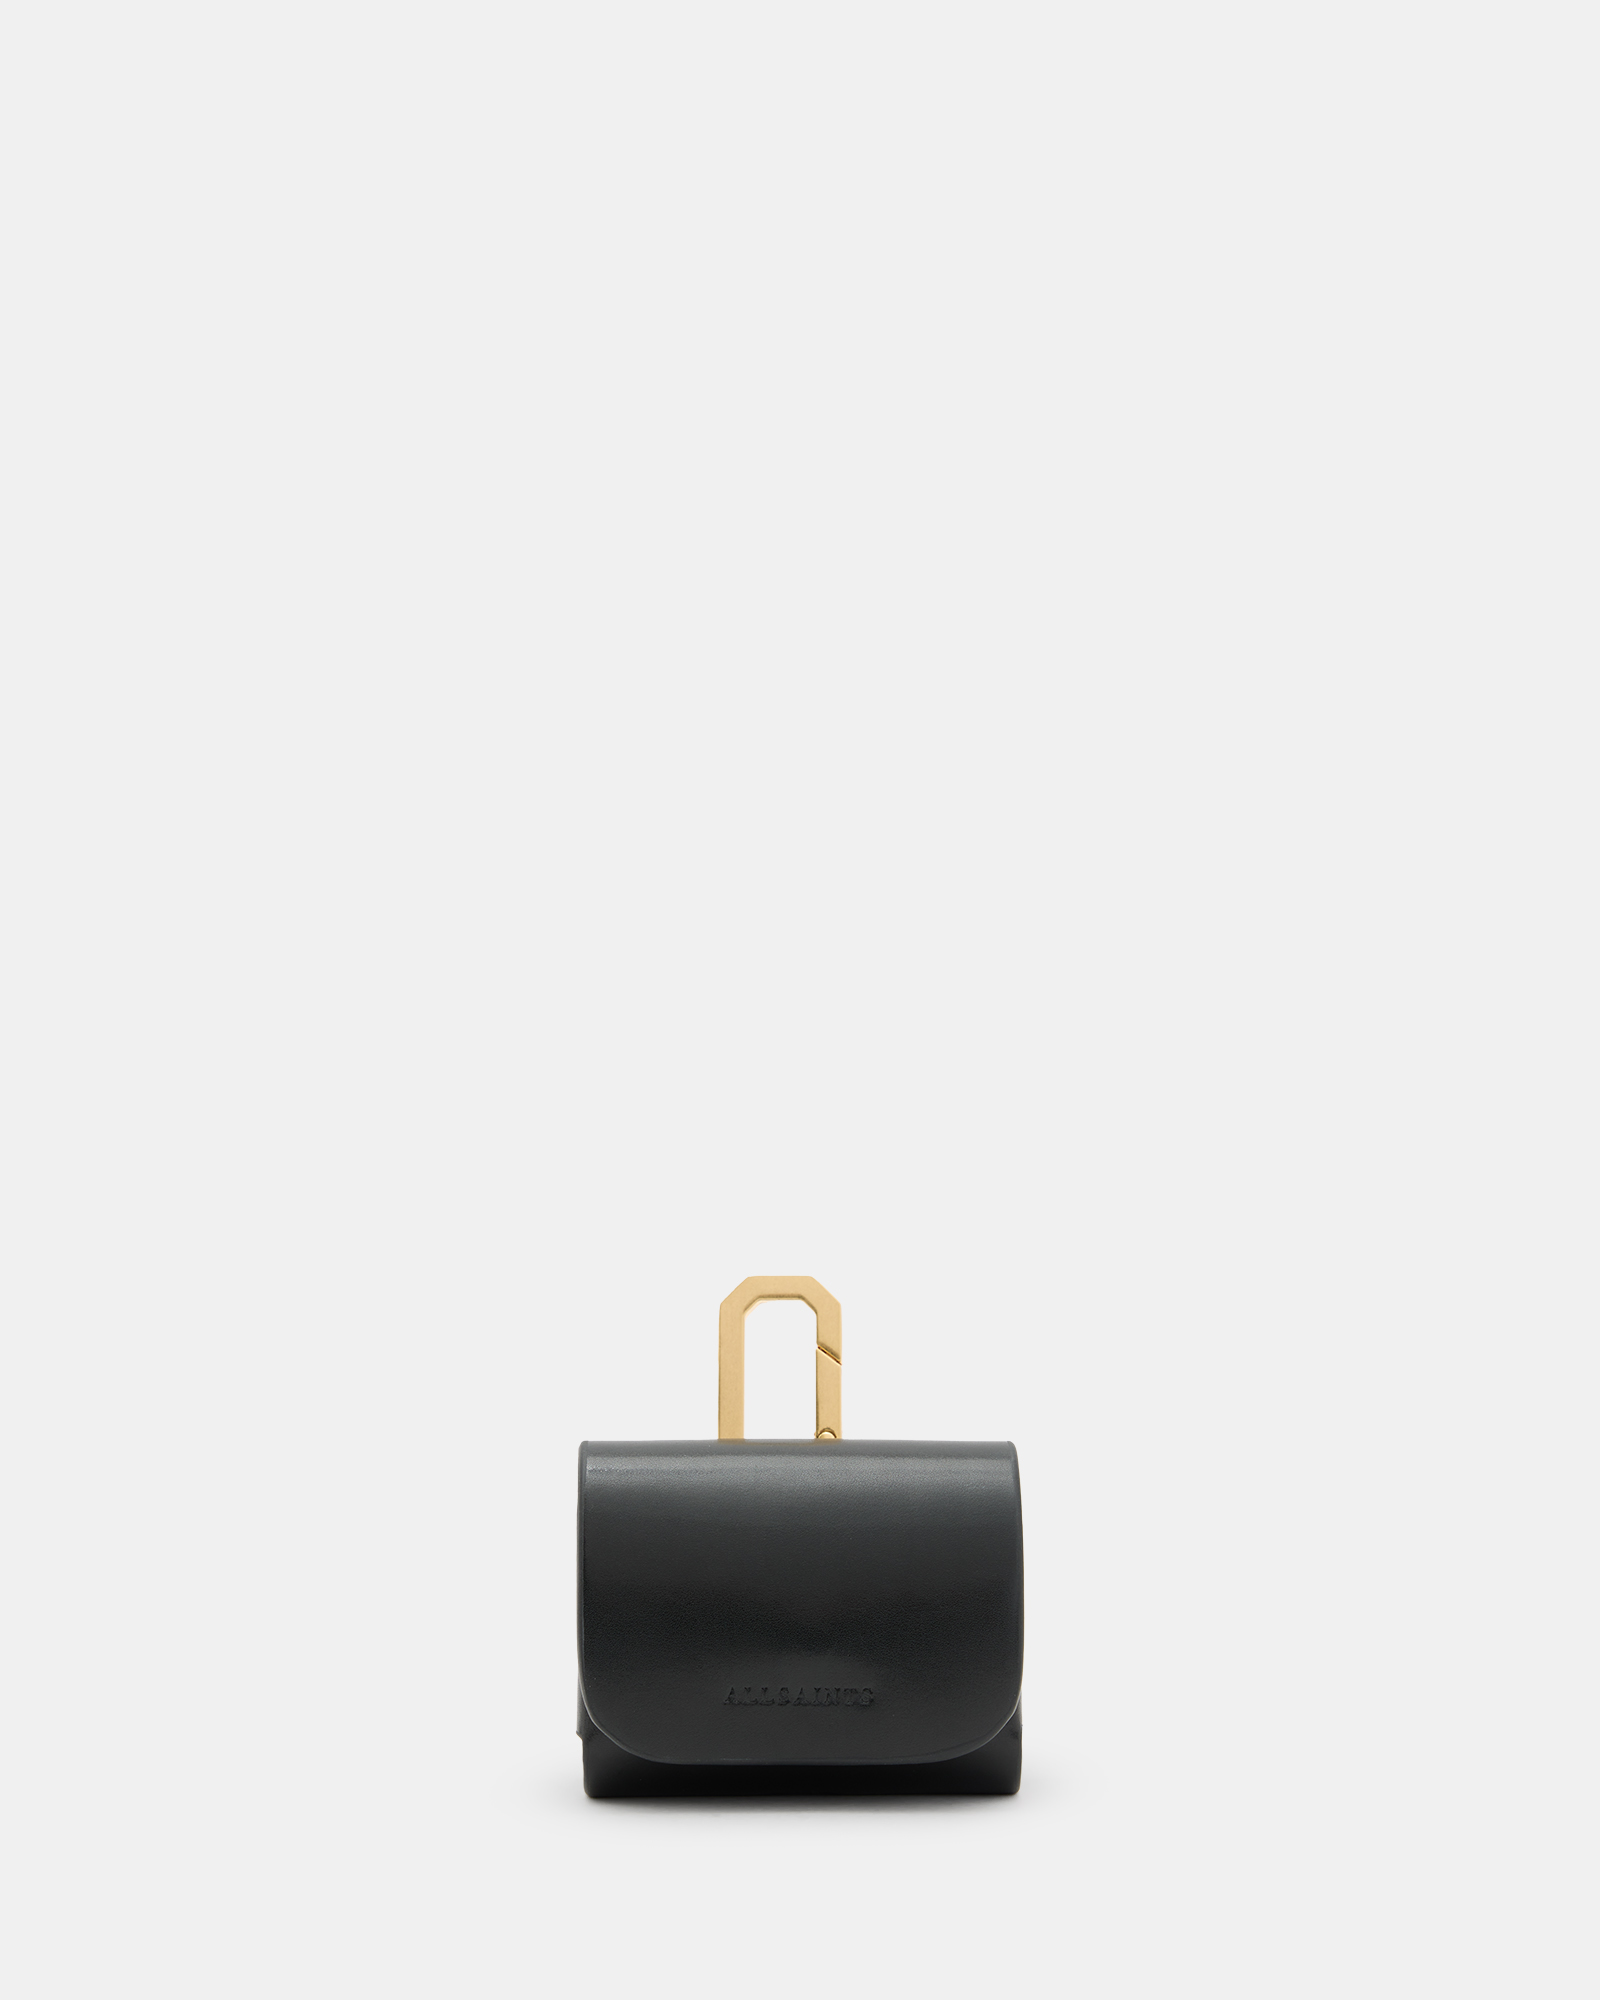 AllSaints Airpod Leather Case,, Black